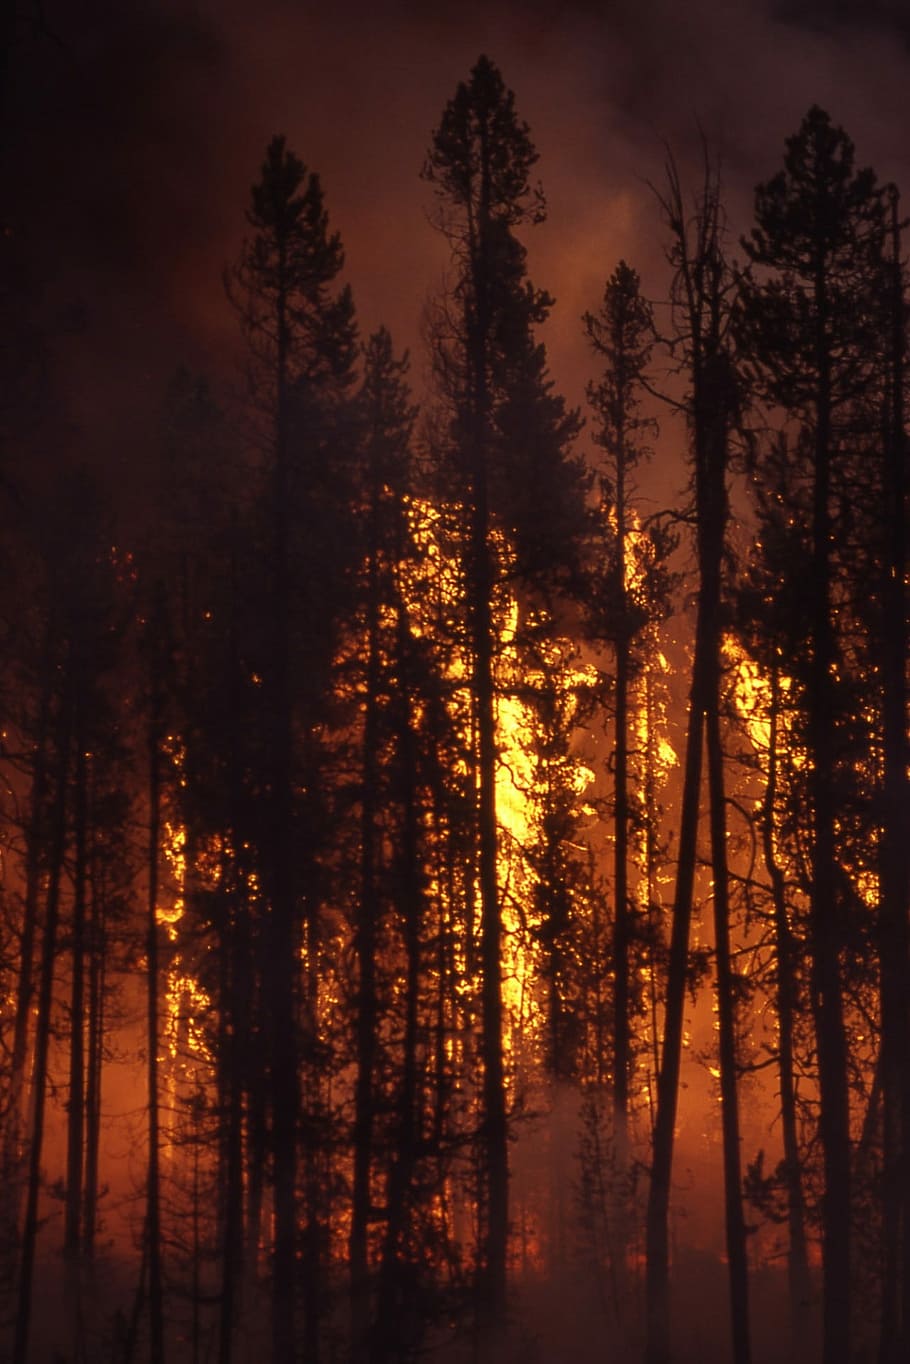 Wildfire, Forest, Fire, Blaze, Smoke, forest, fire, trees, heat, burning, hot